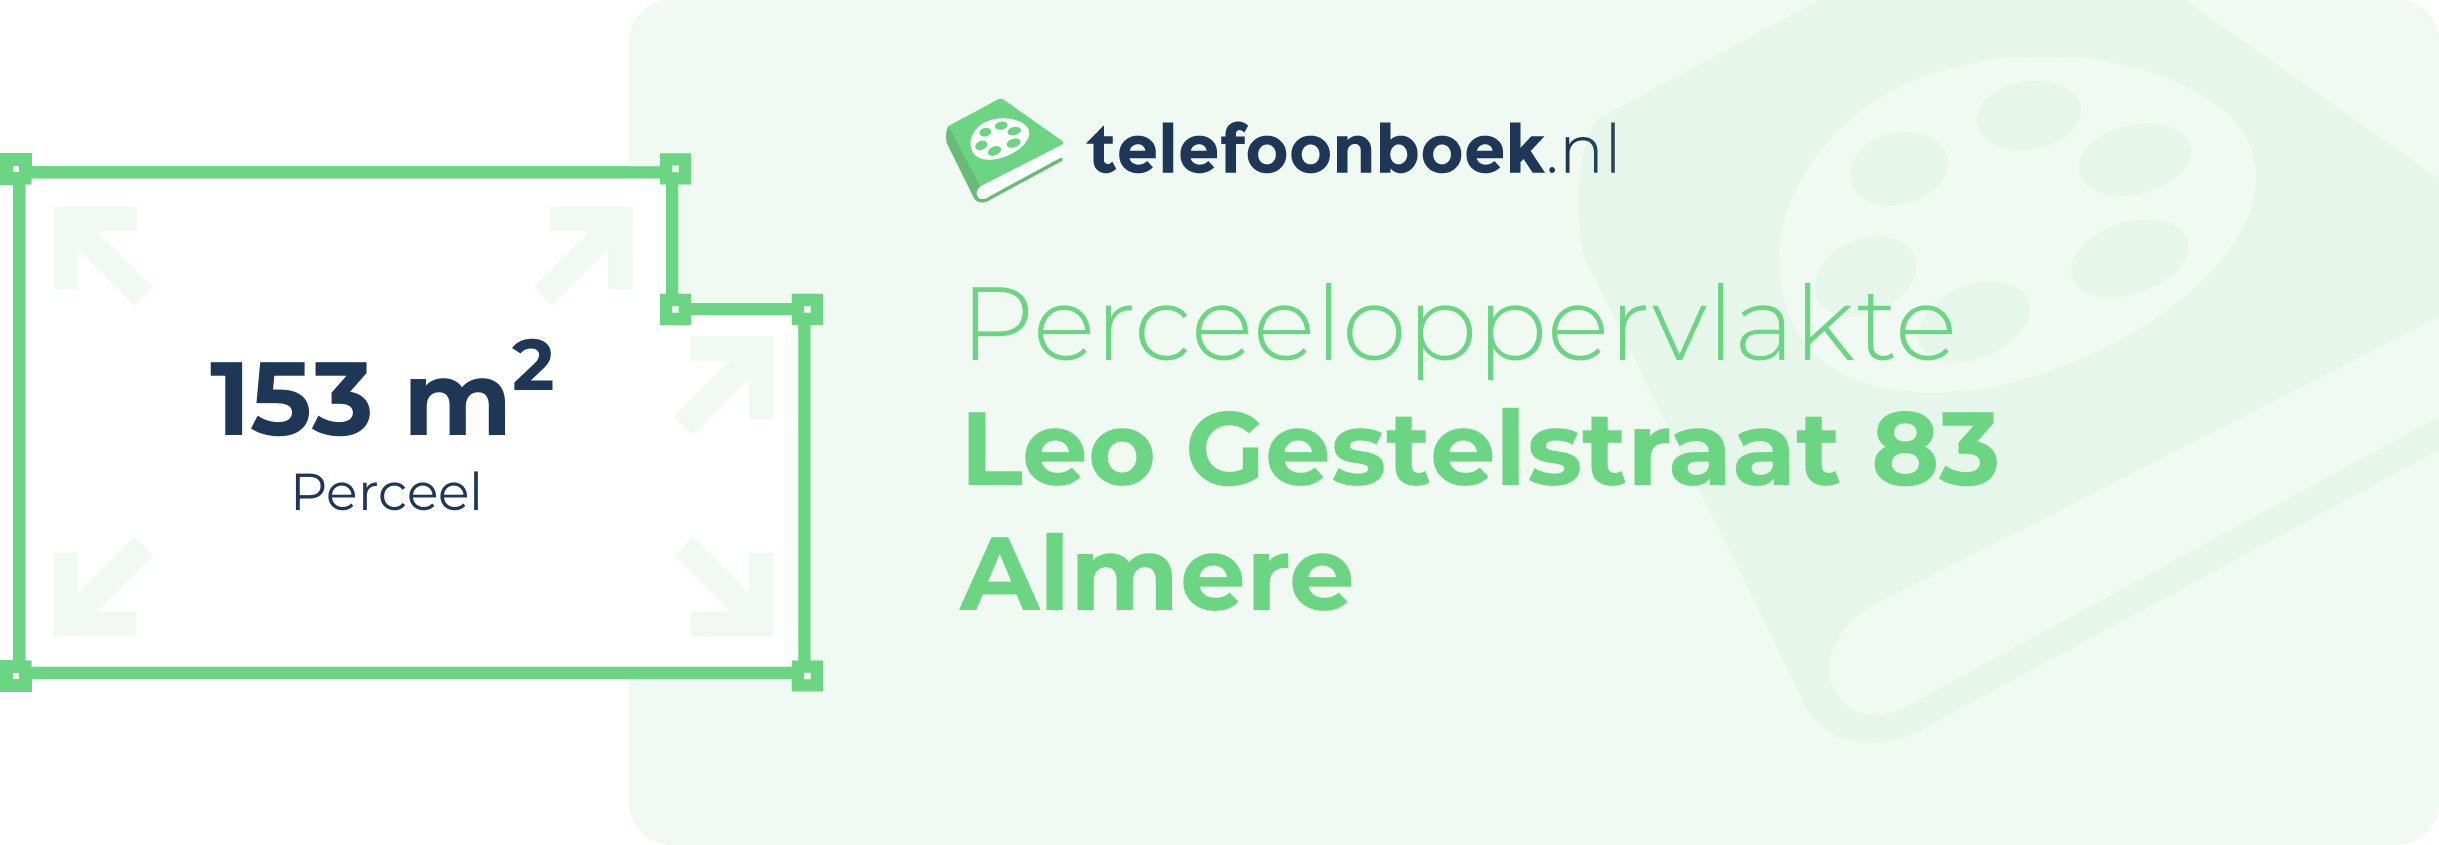 Perceeloppervlakte Leo Gestelstraat 83 Almere